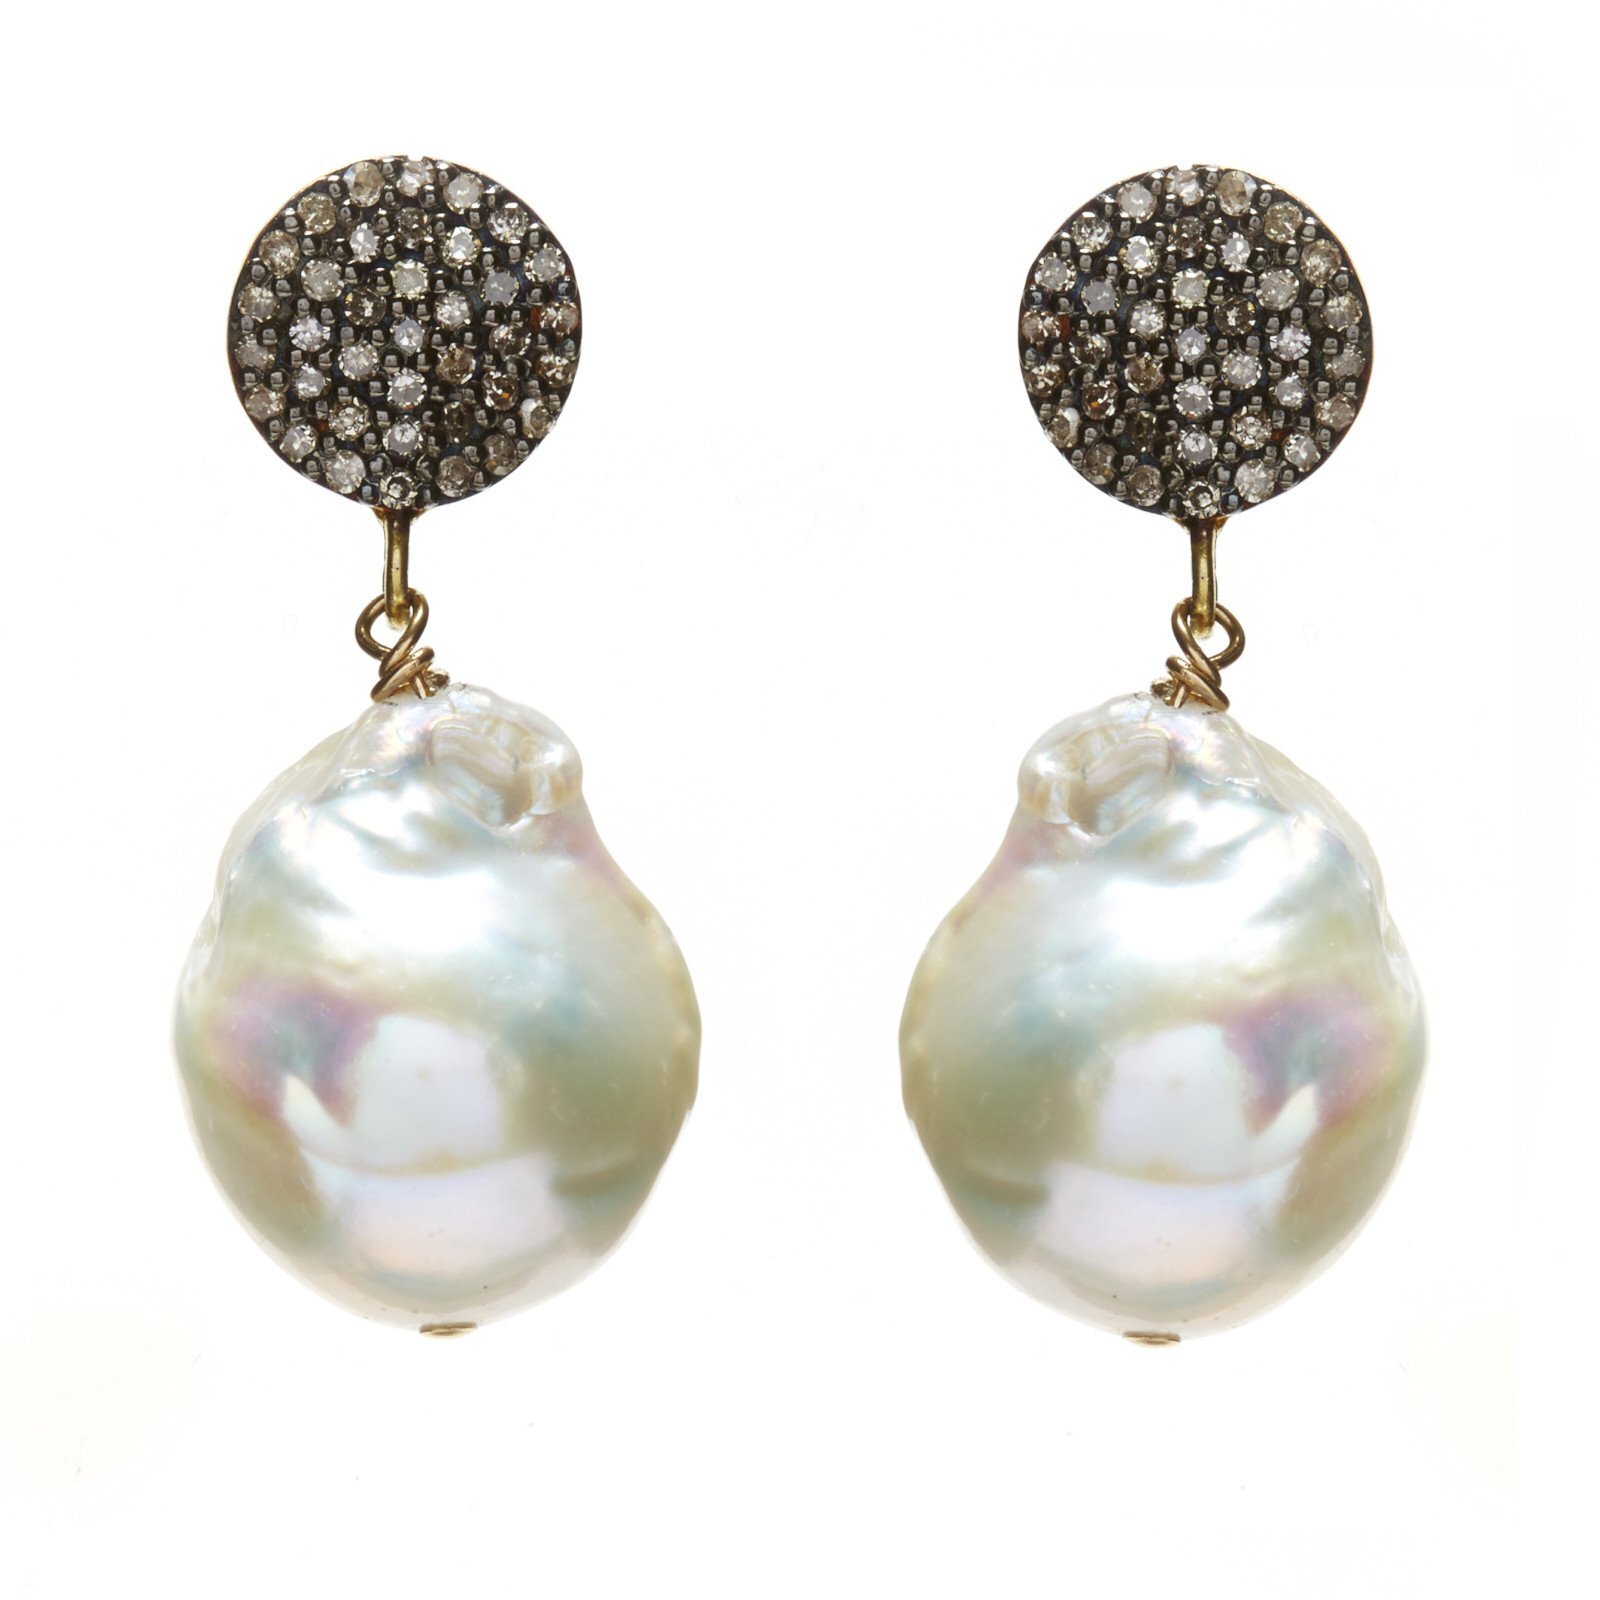 Baroque_diamond_earrings-_gold-white_pearl_2368e730-9de0-4a96-bb4d-89f8ca1861c3.jpg